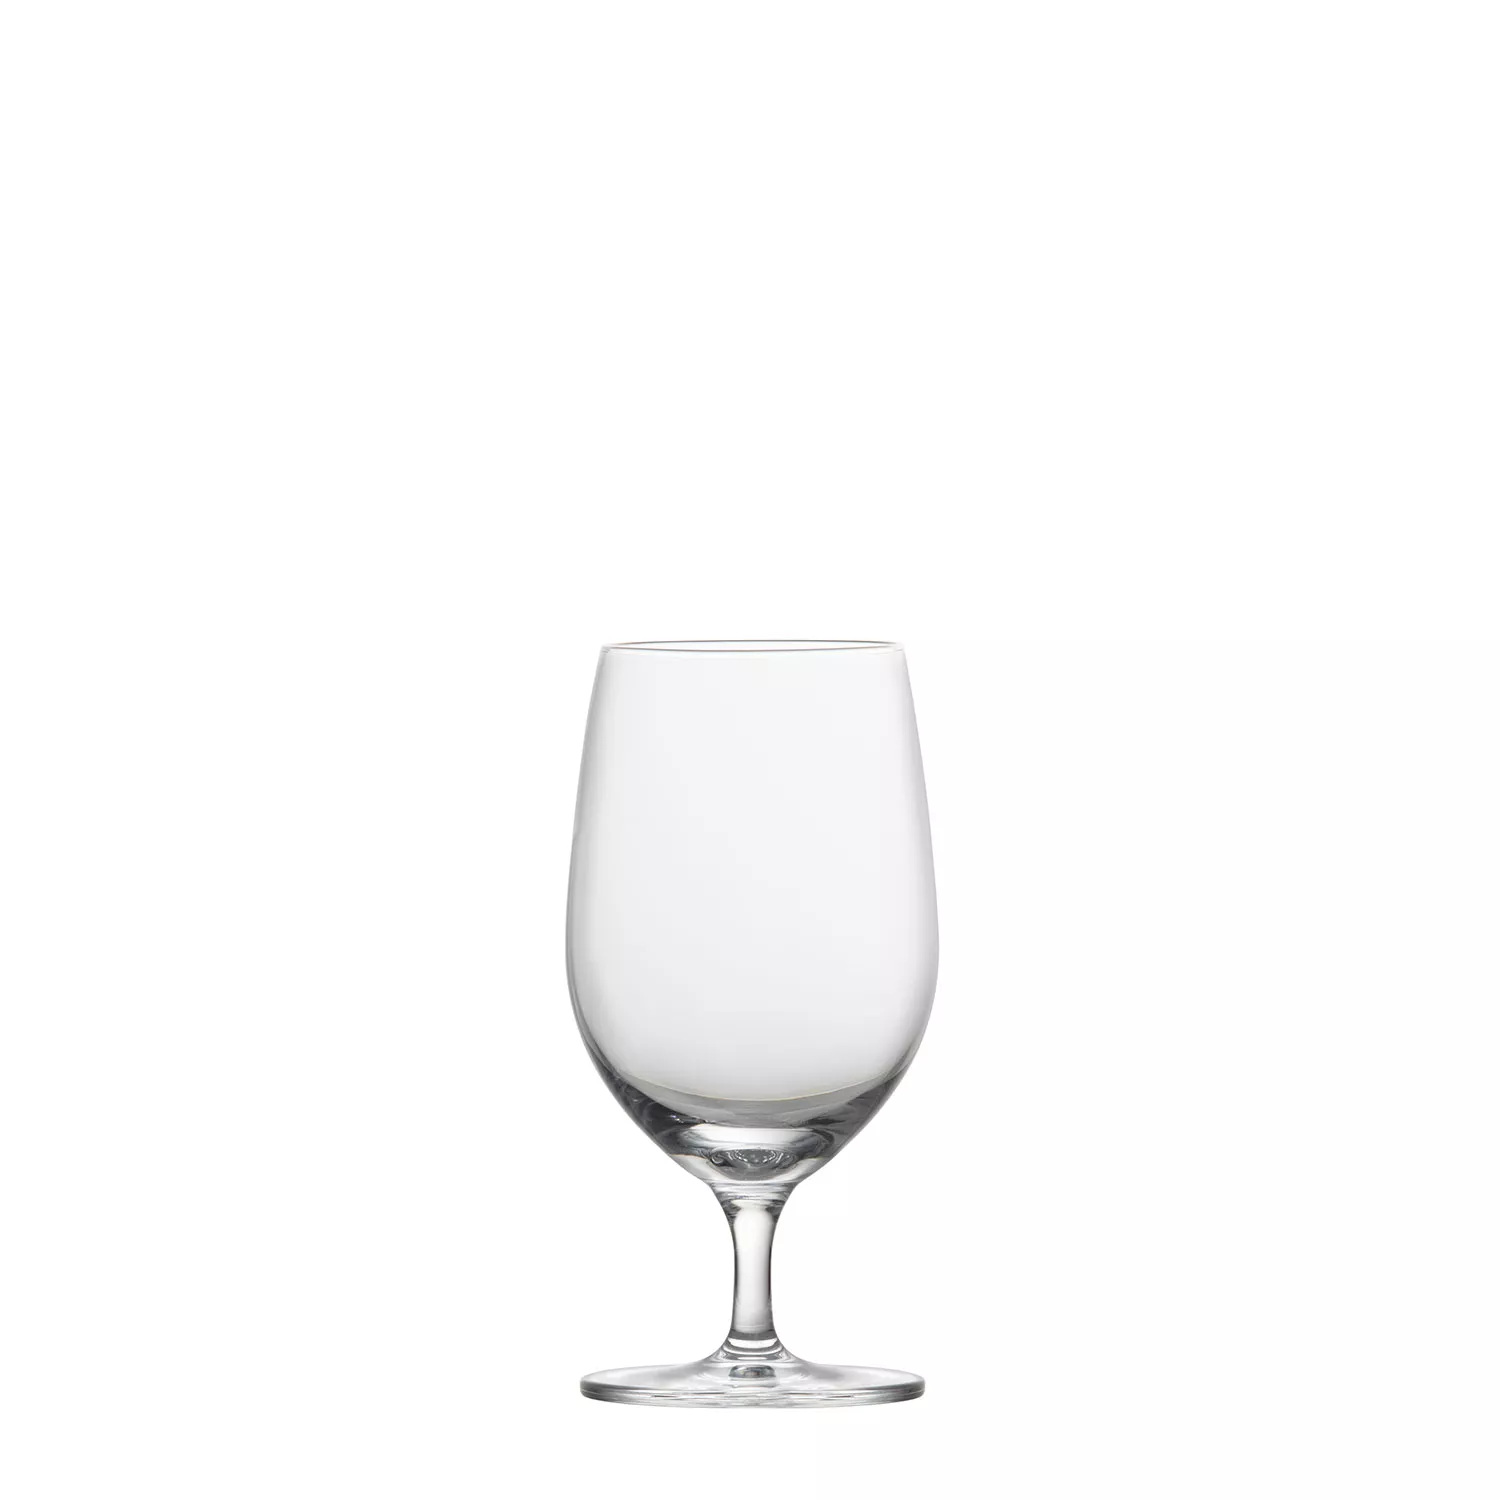 Chef's Star 15oz Stemless Wine Glasses Set Classic Durable Wine